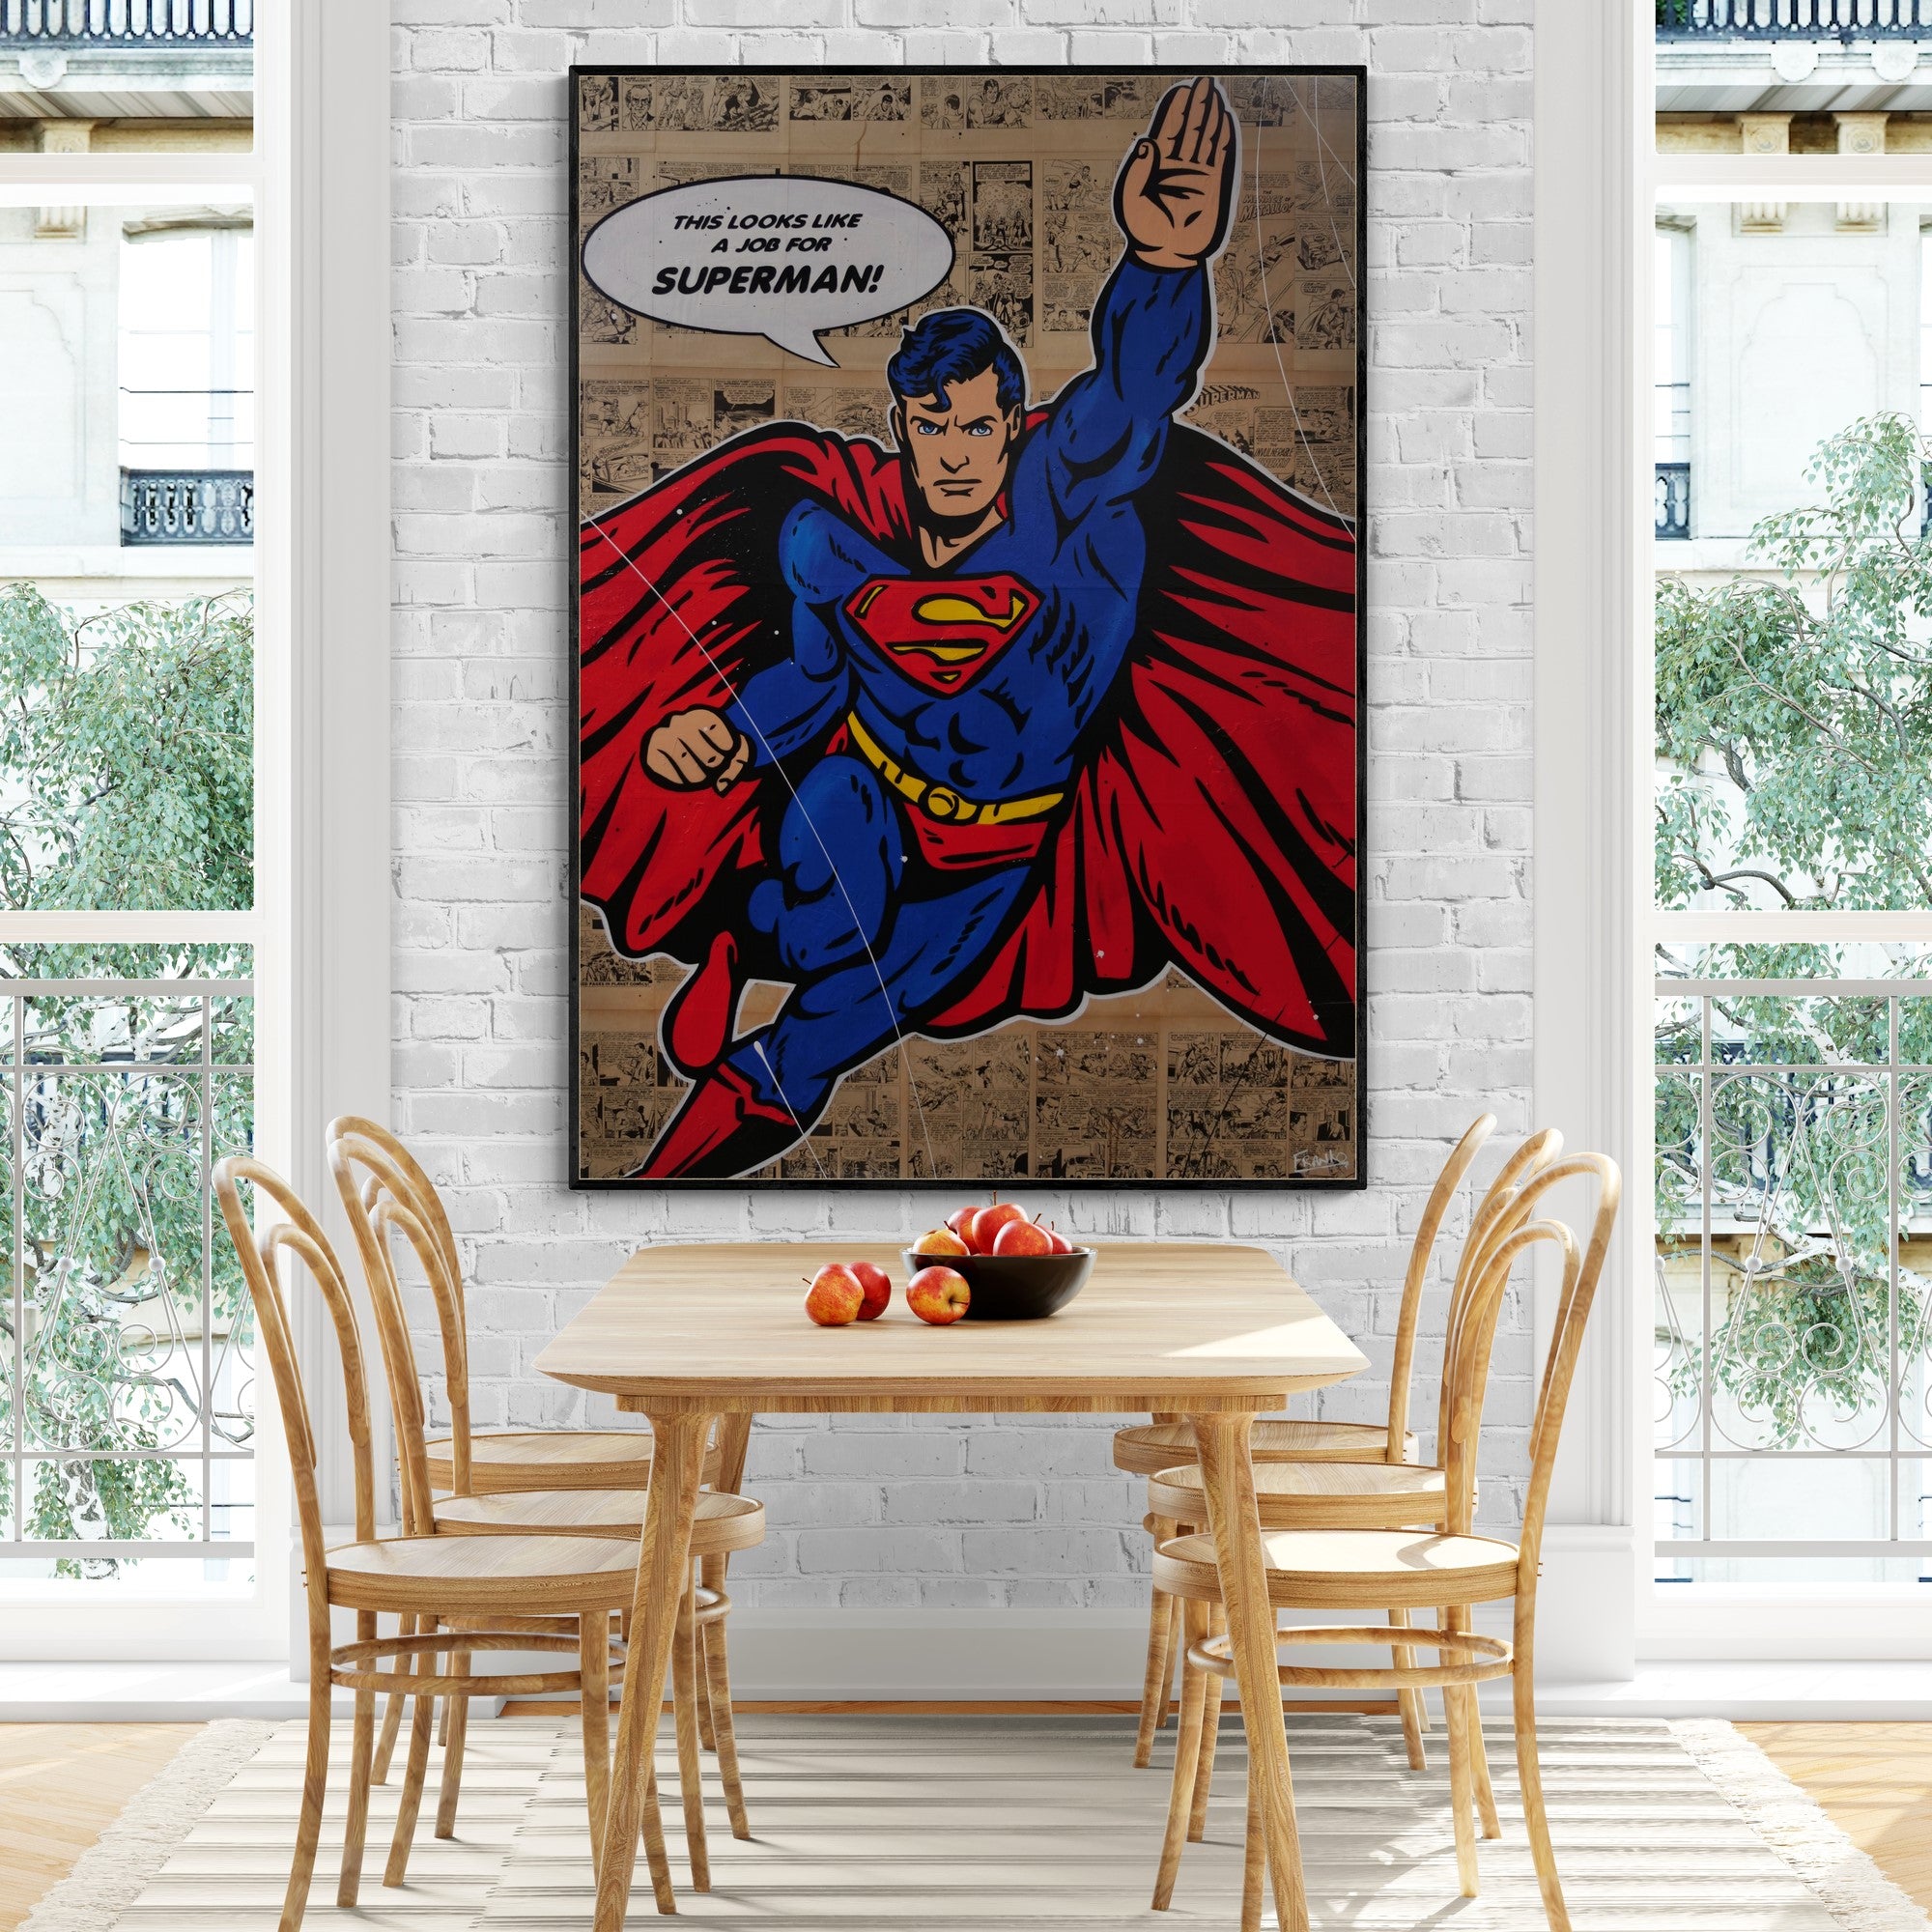 Super Job 140cm x 100cm Superman Urban Pop Art Book Club Painting (SOLD)